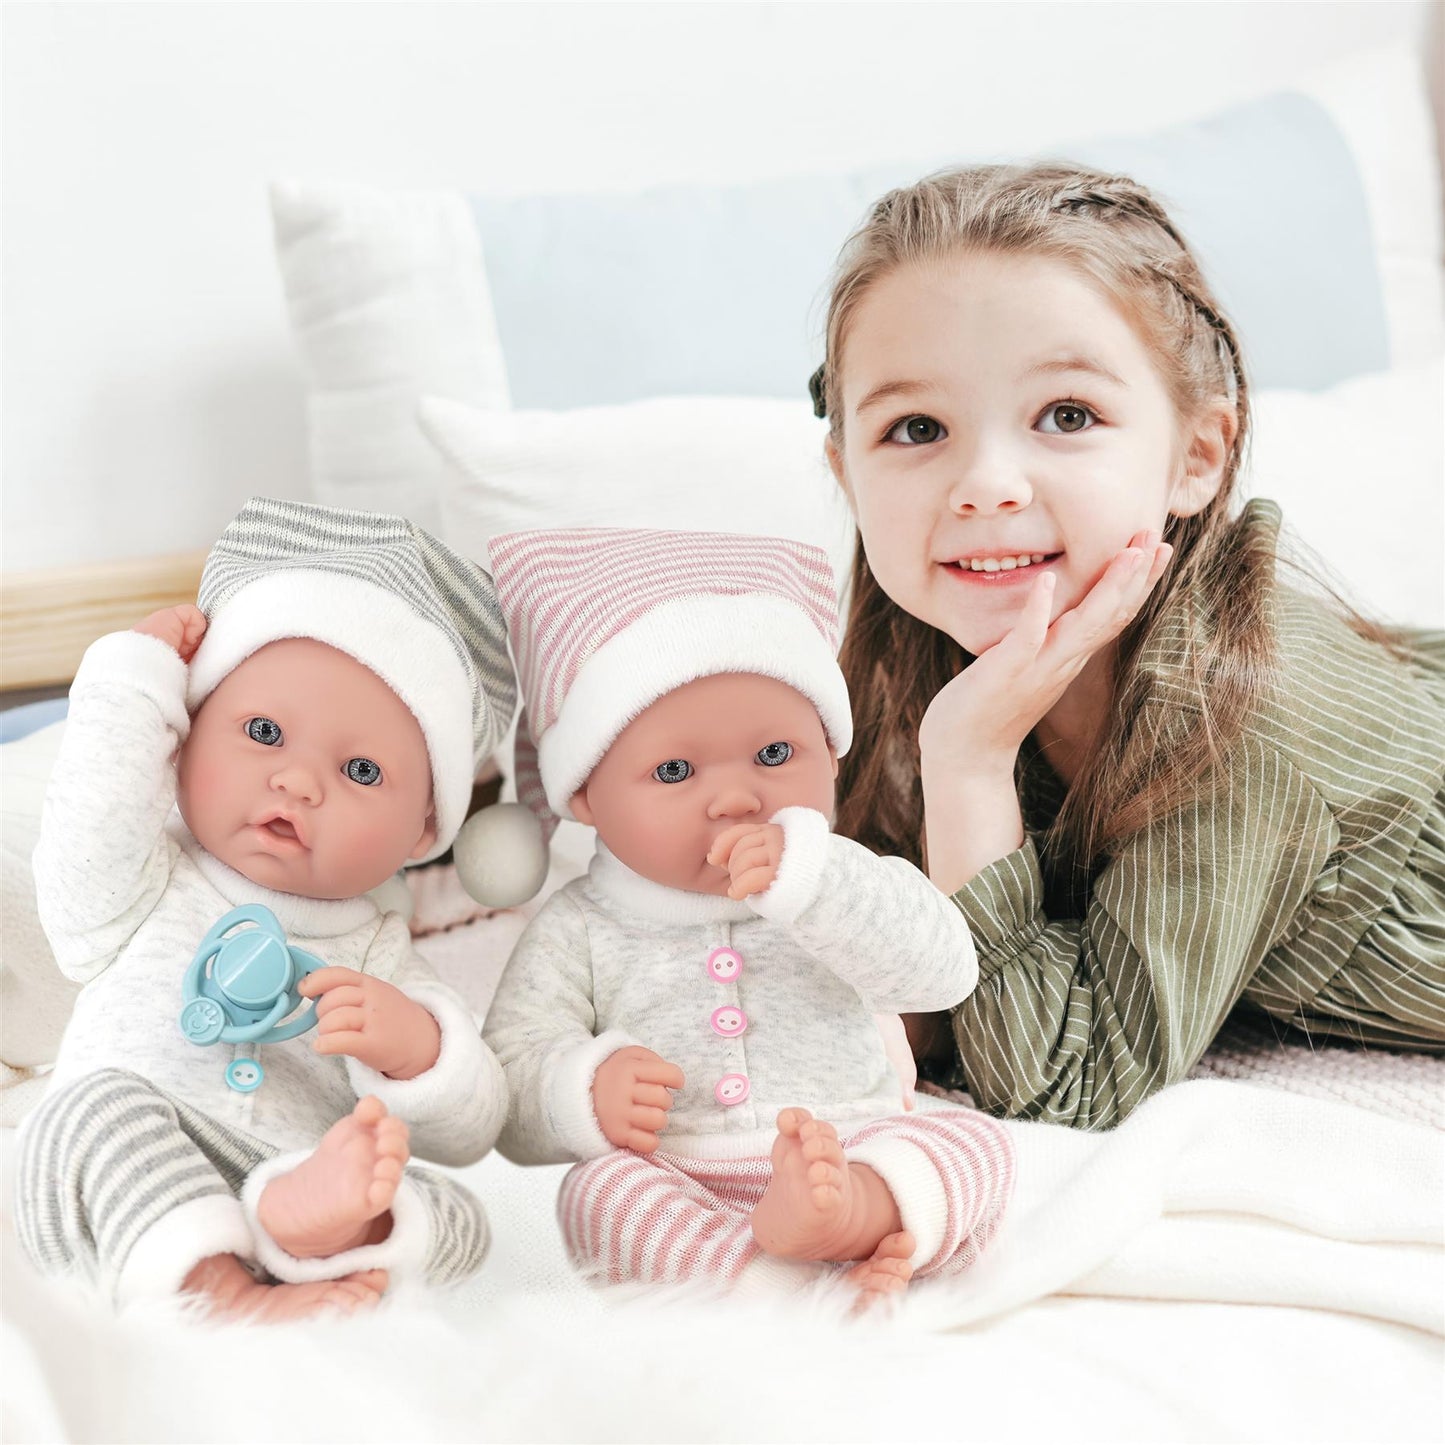 Twin Baby Dolls Dummy and Feeding Set by BiBi Doll - UKBuyZone